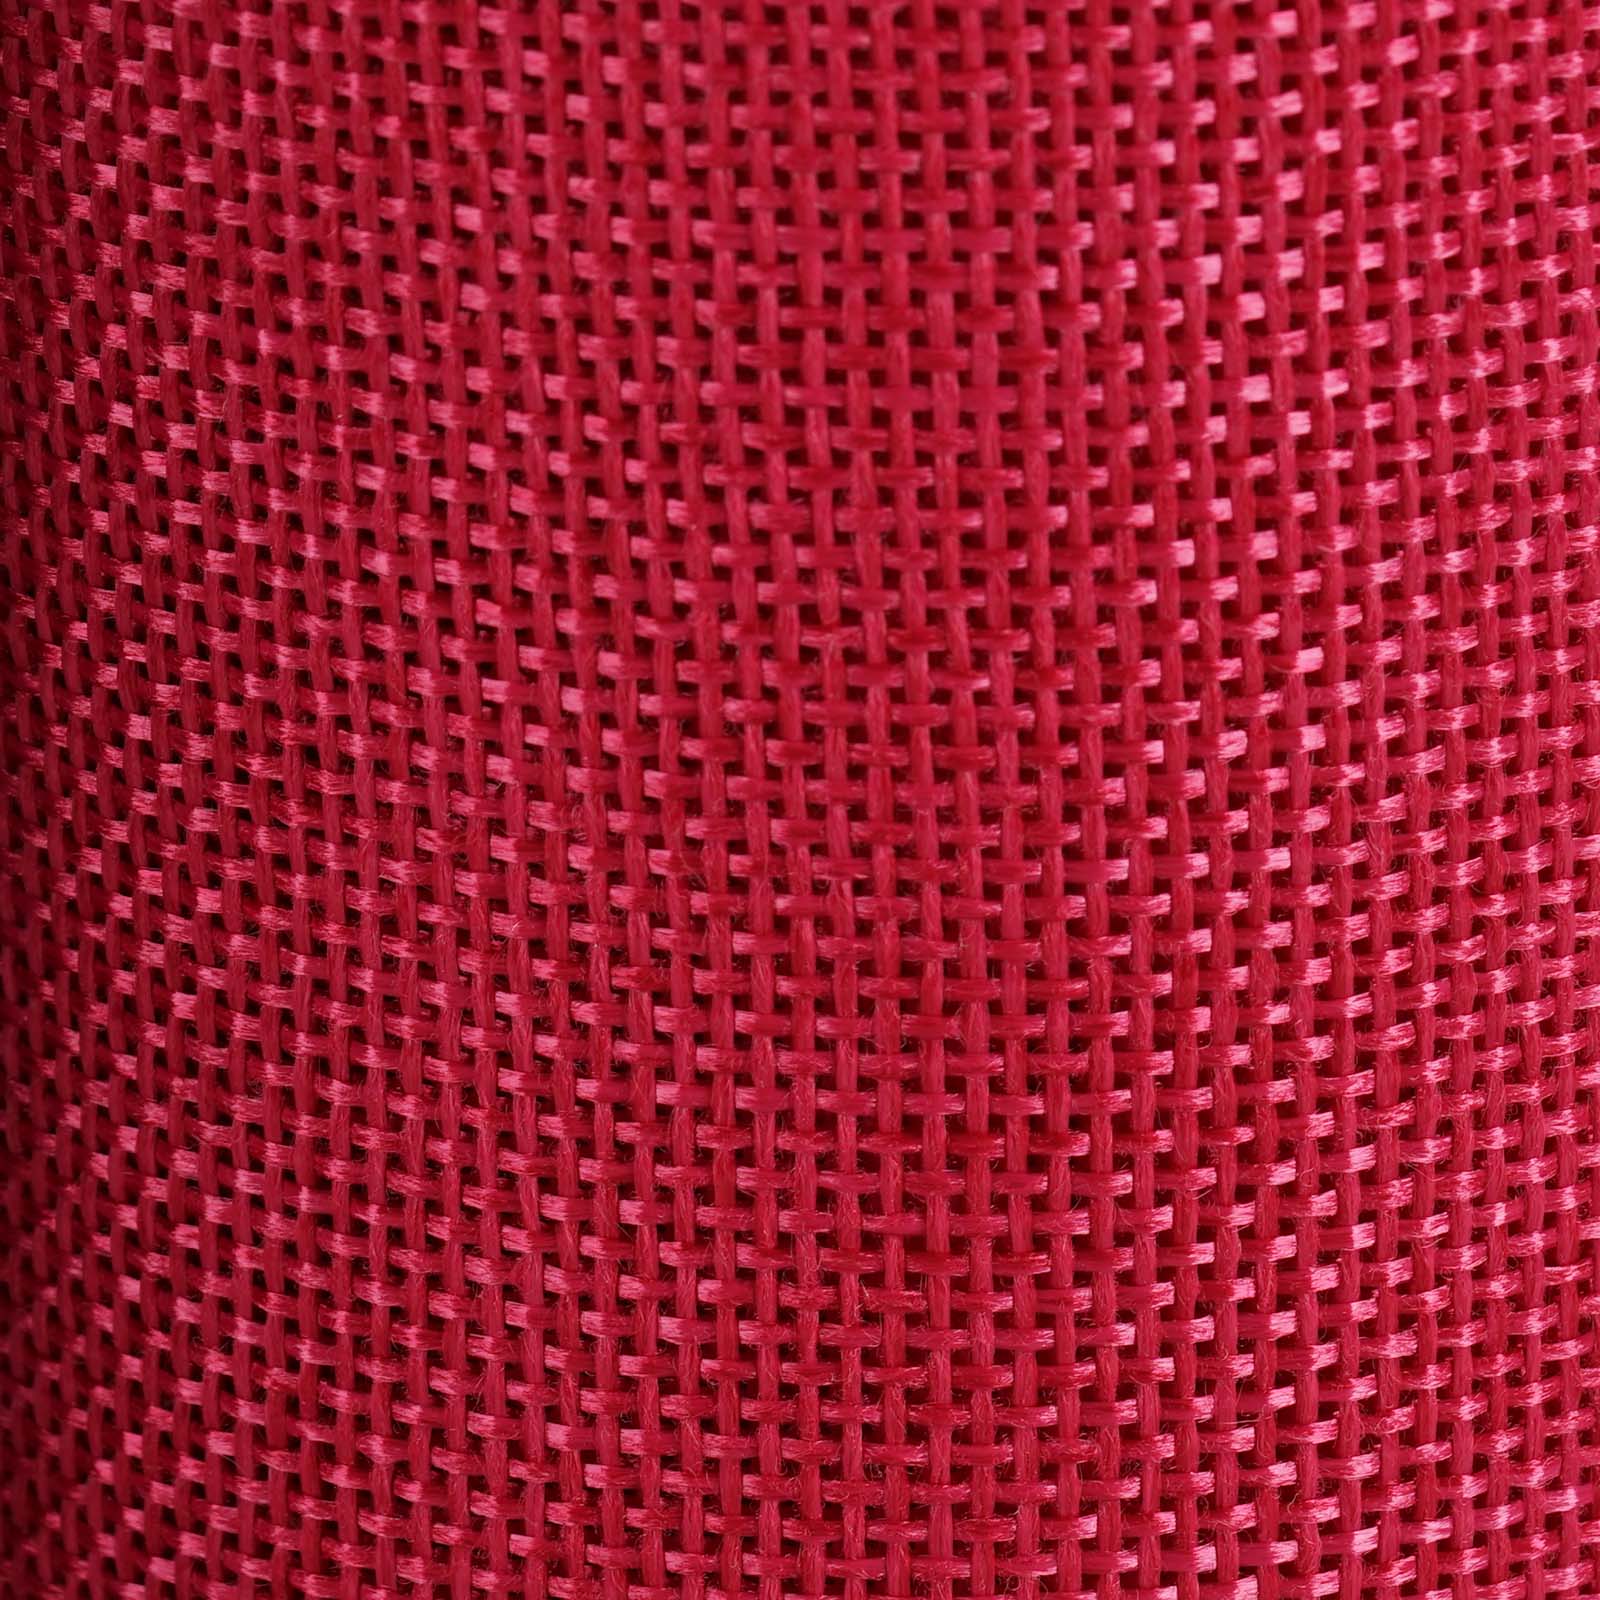 Landscape Burlap Rolls 6 X 10 Yards Fushia Polyester Burlap Fabric Tableclothsfactory